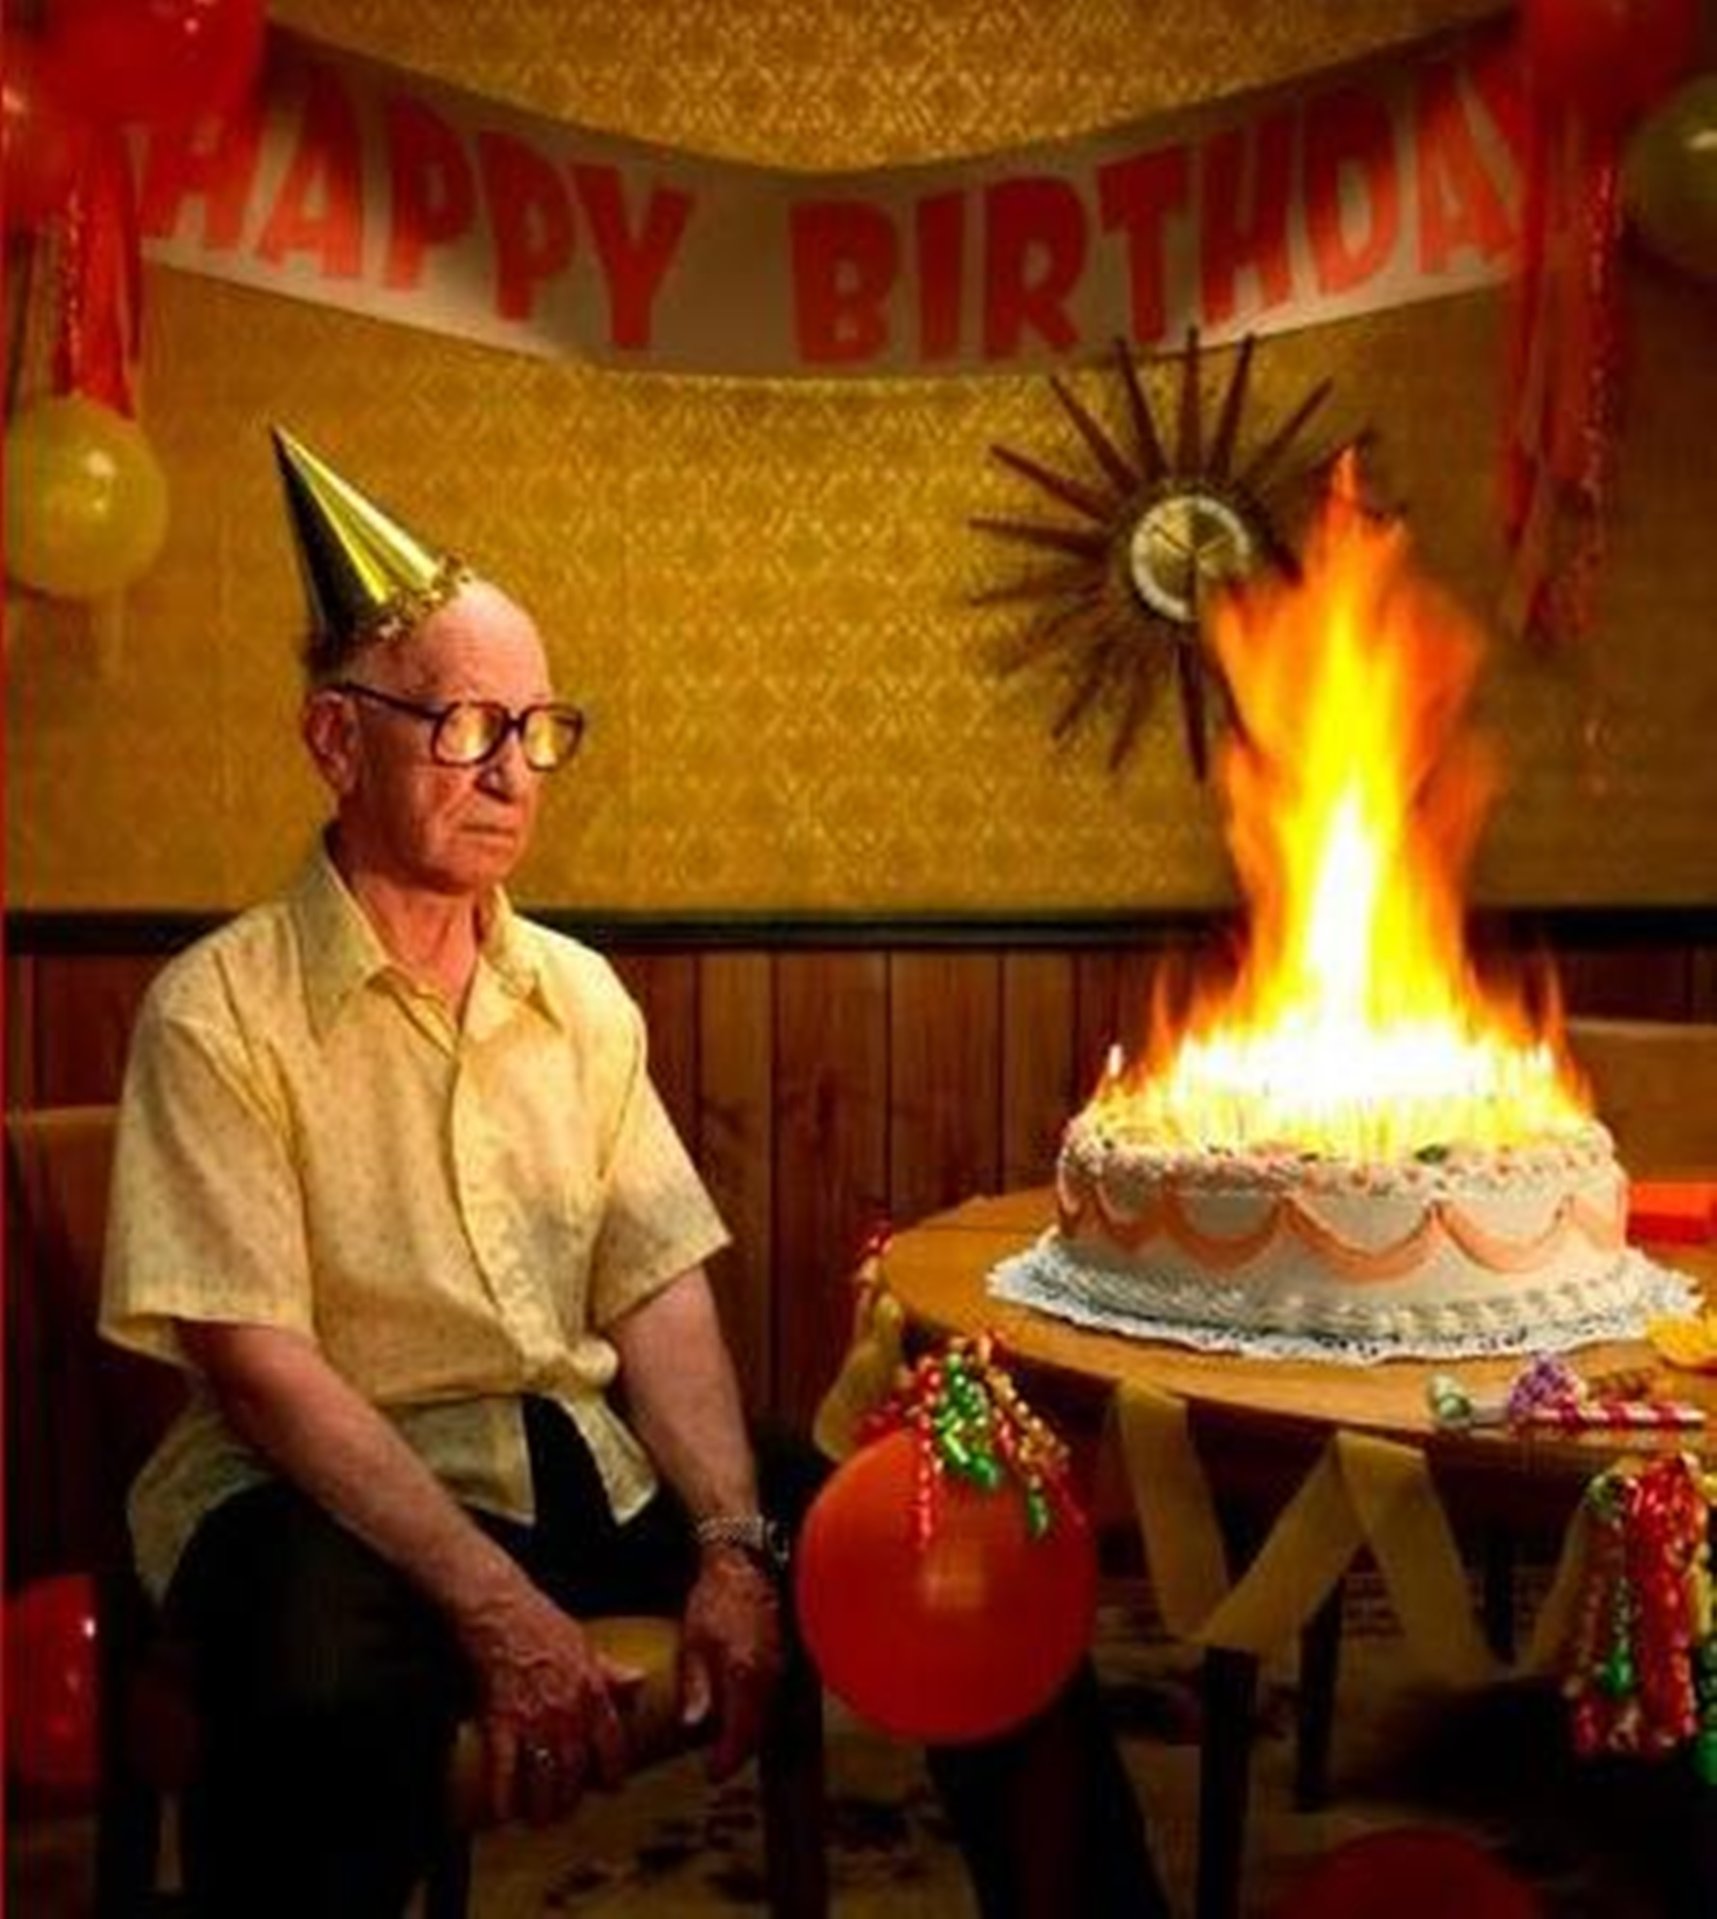 birthday-cake-candles-fire - Copy - Copy.jpg